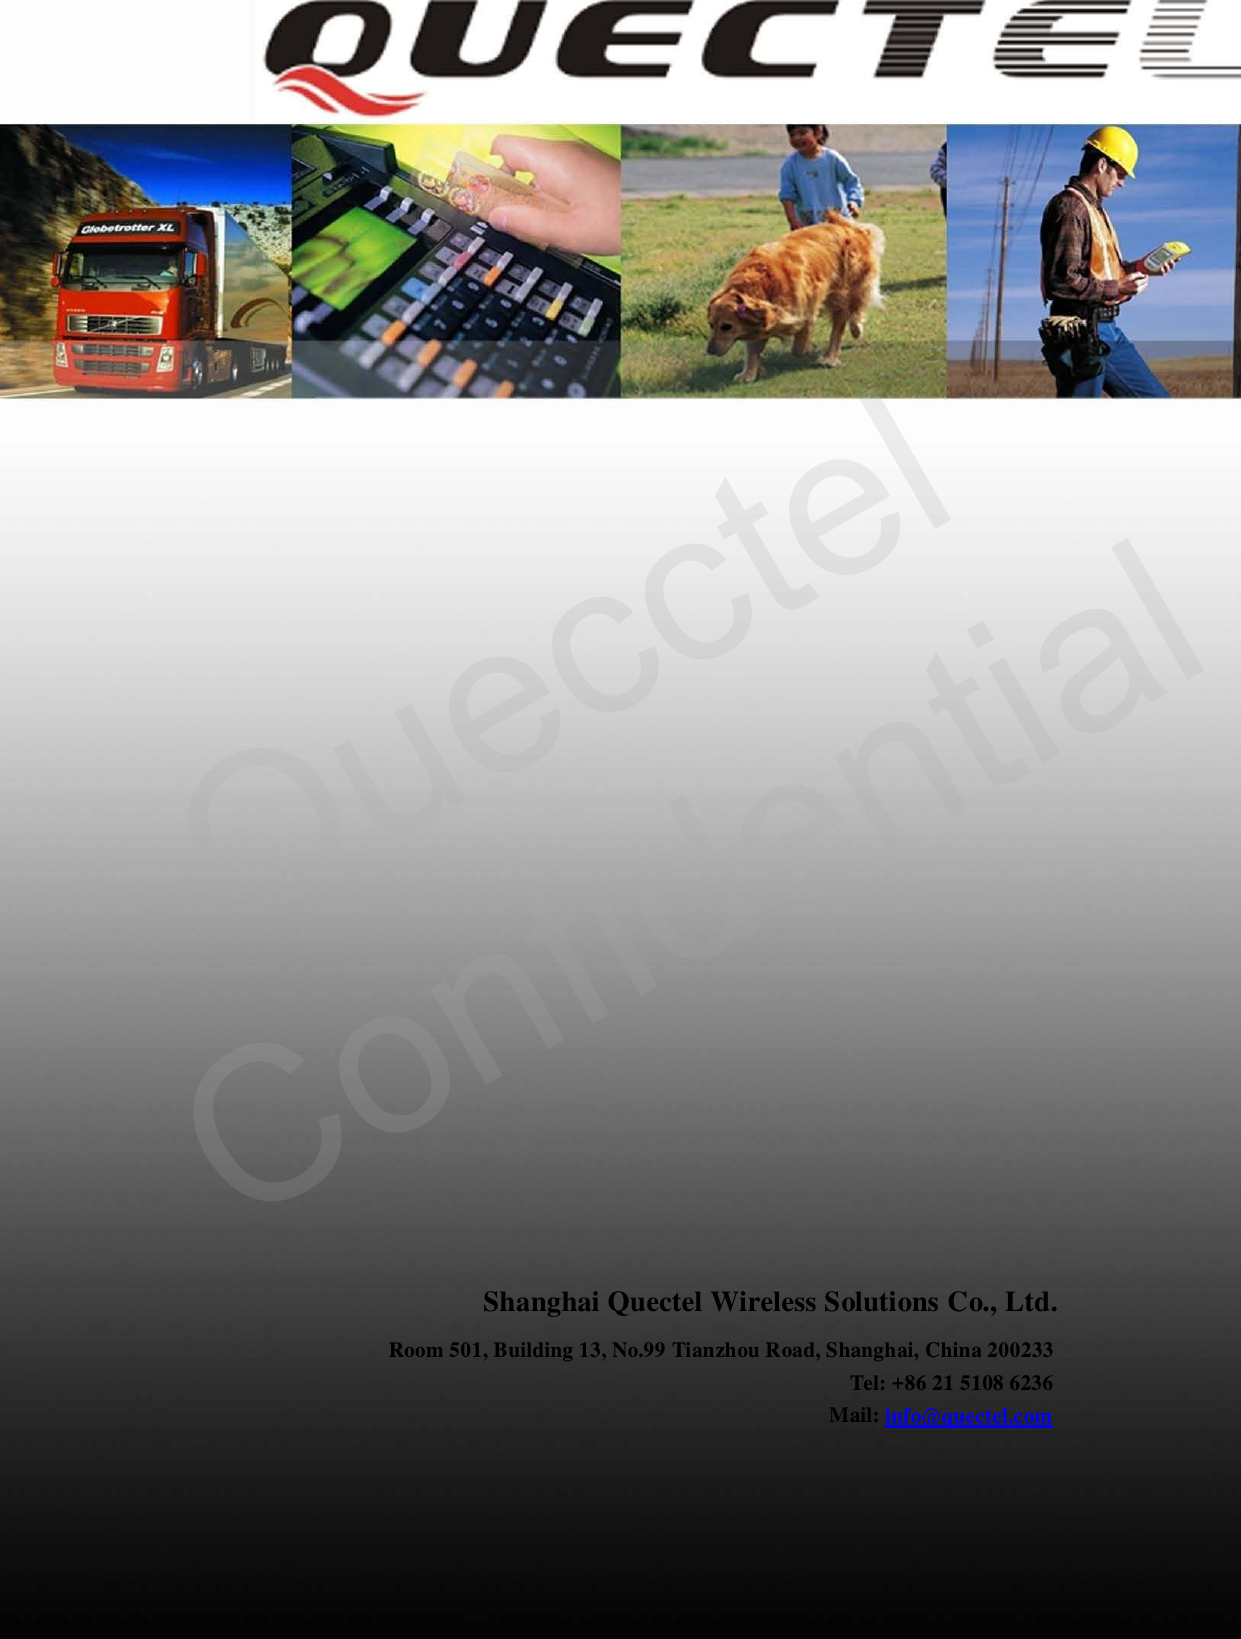                                                                    Shanghai Quectel Wireless Solutions Co., Ltd. Room 501, Building 13, No.99 Tianzhou Road, Shanghai, China 200233 Tel: +86 21 5108 6236 Mail: info@quectel.com  Quecctel Confidential